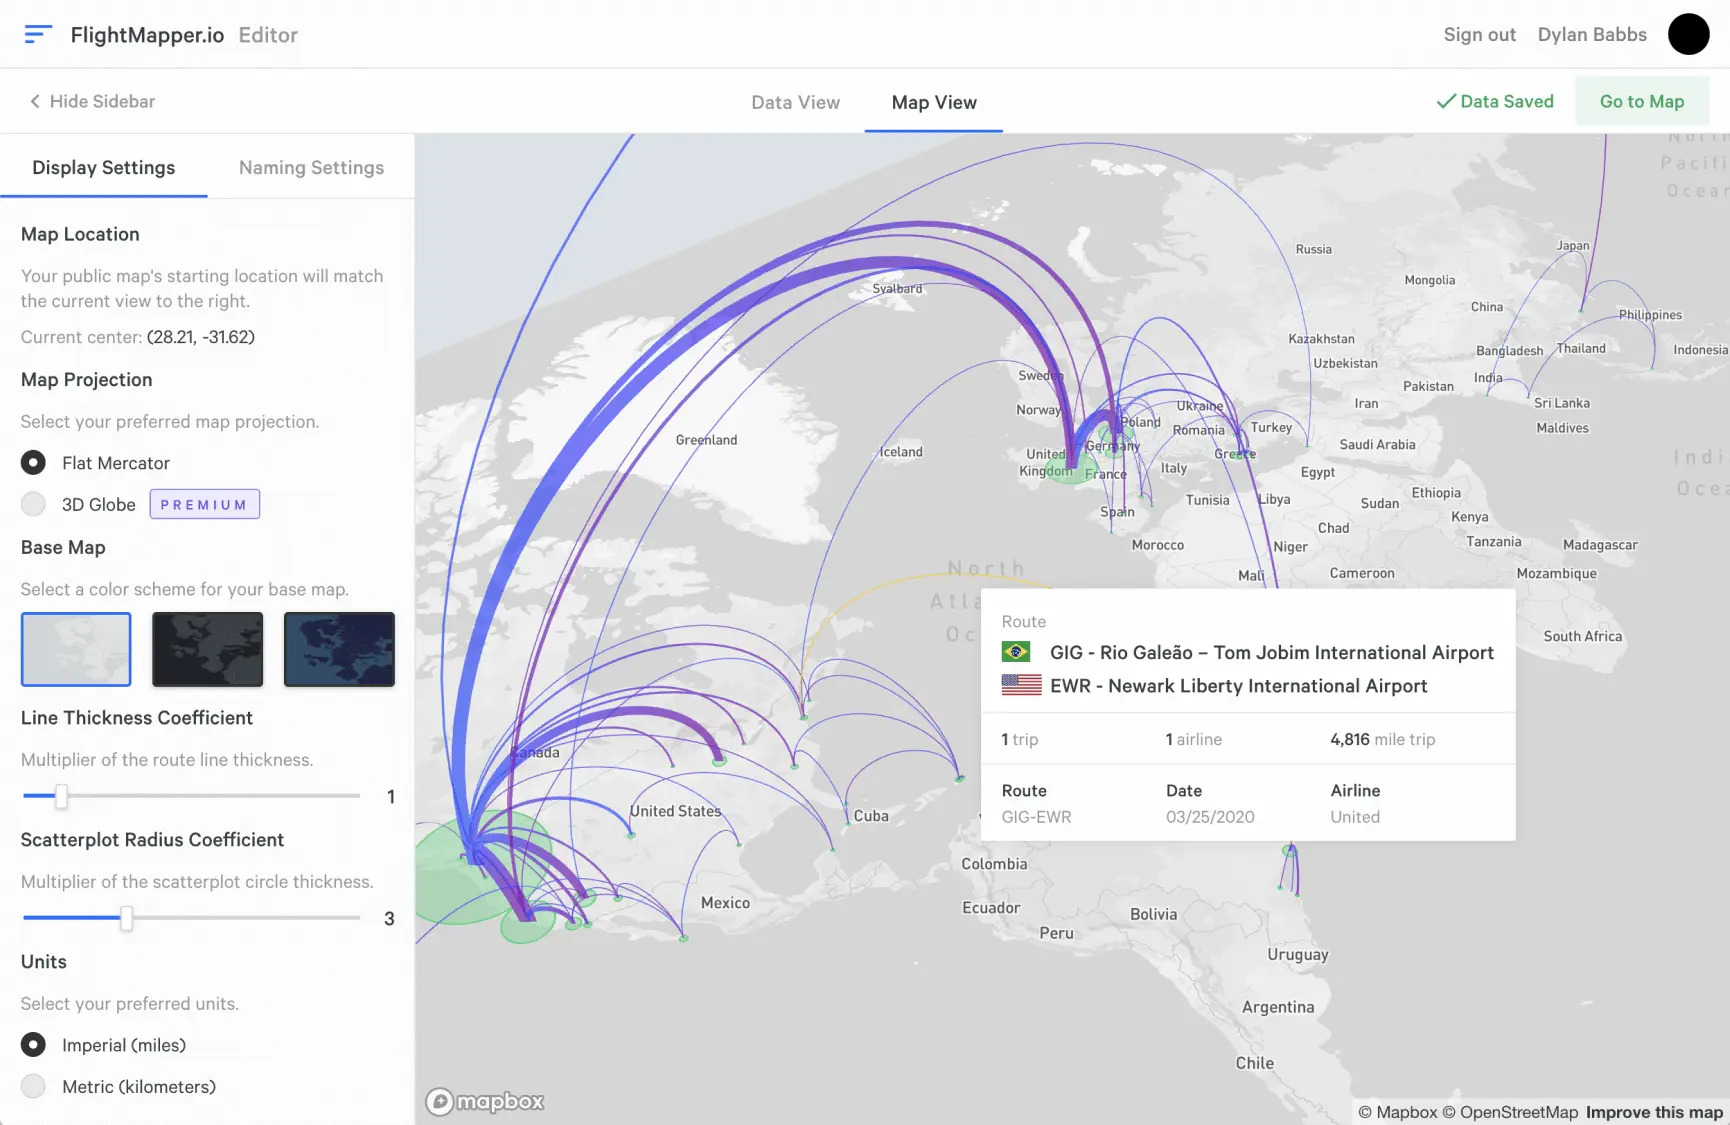 Flightmapper.io User Flight Maps 